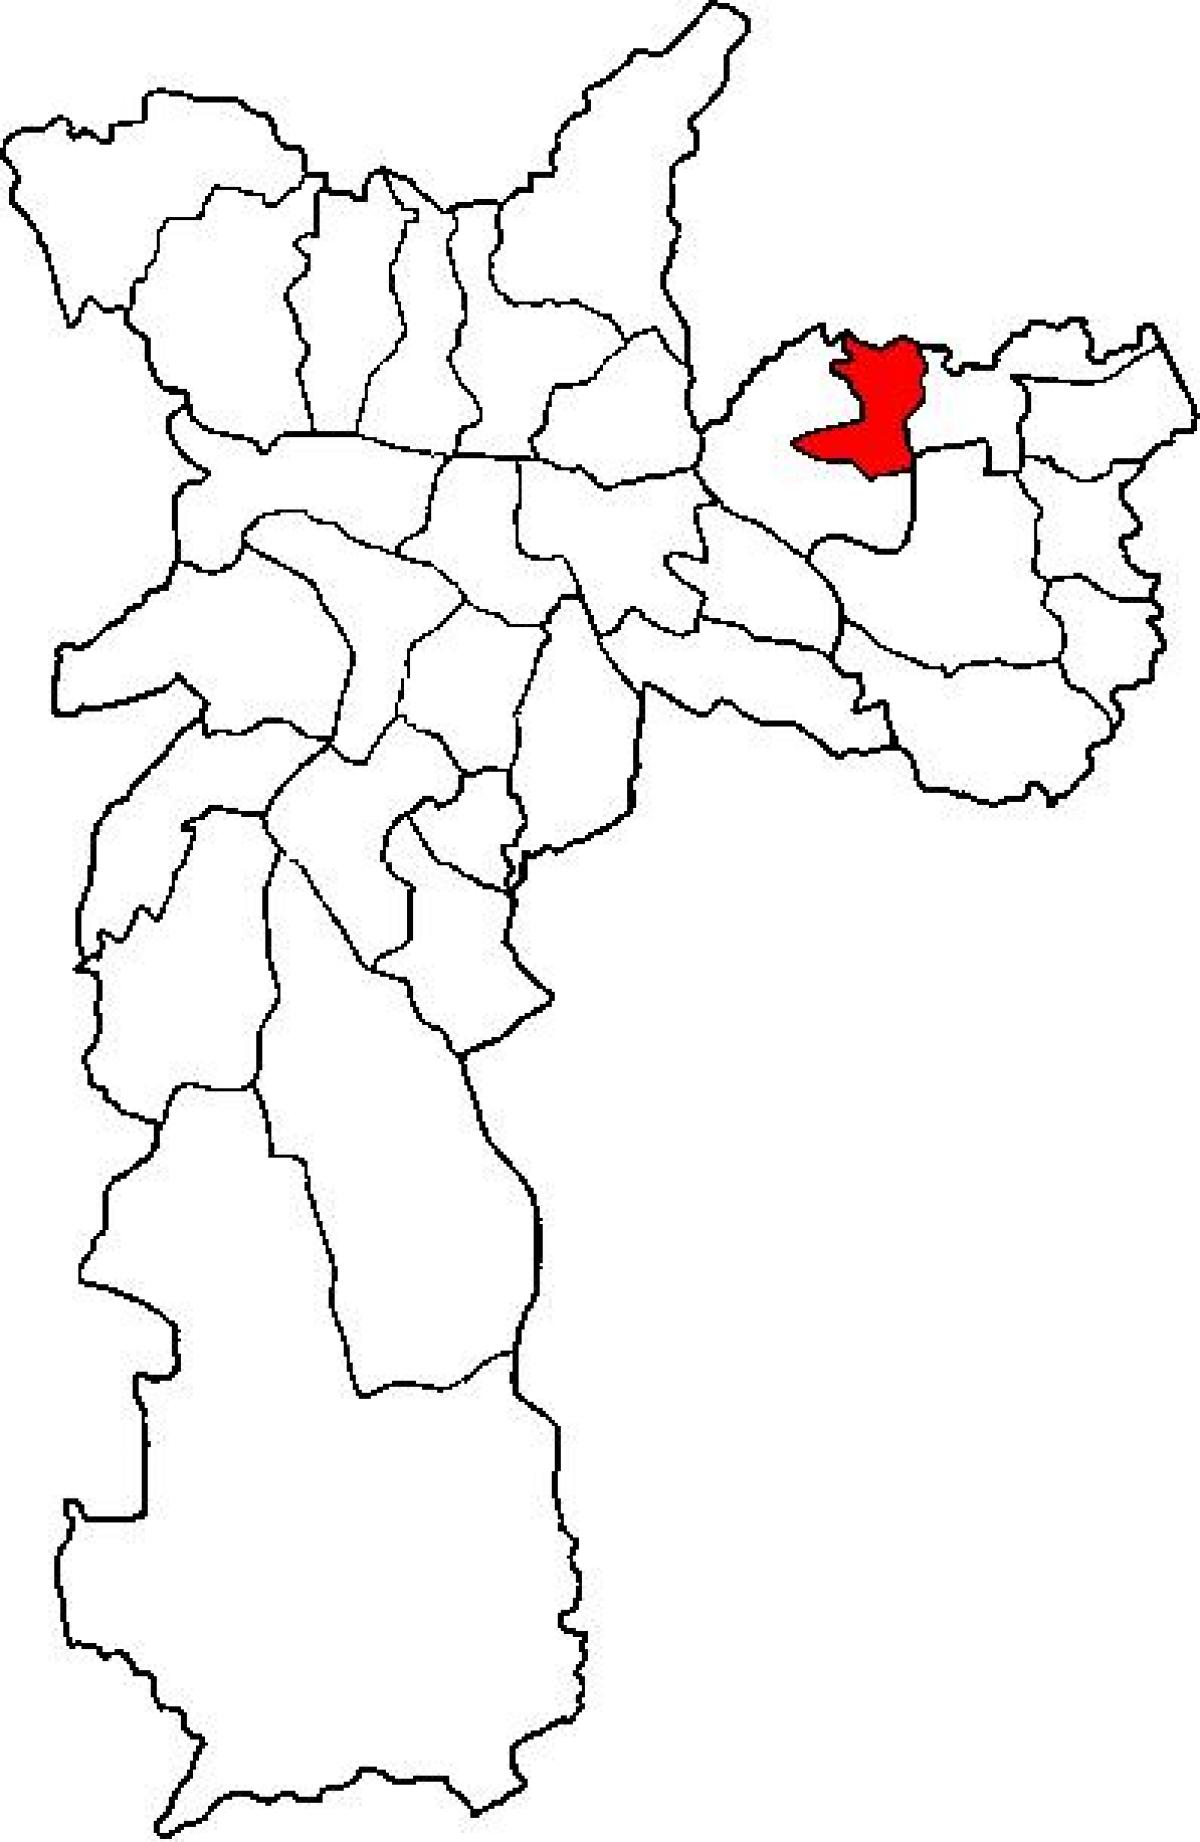 Mapa Ermelino Matarazzo sub-prefektura São Paulo